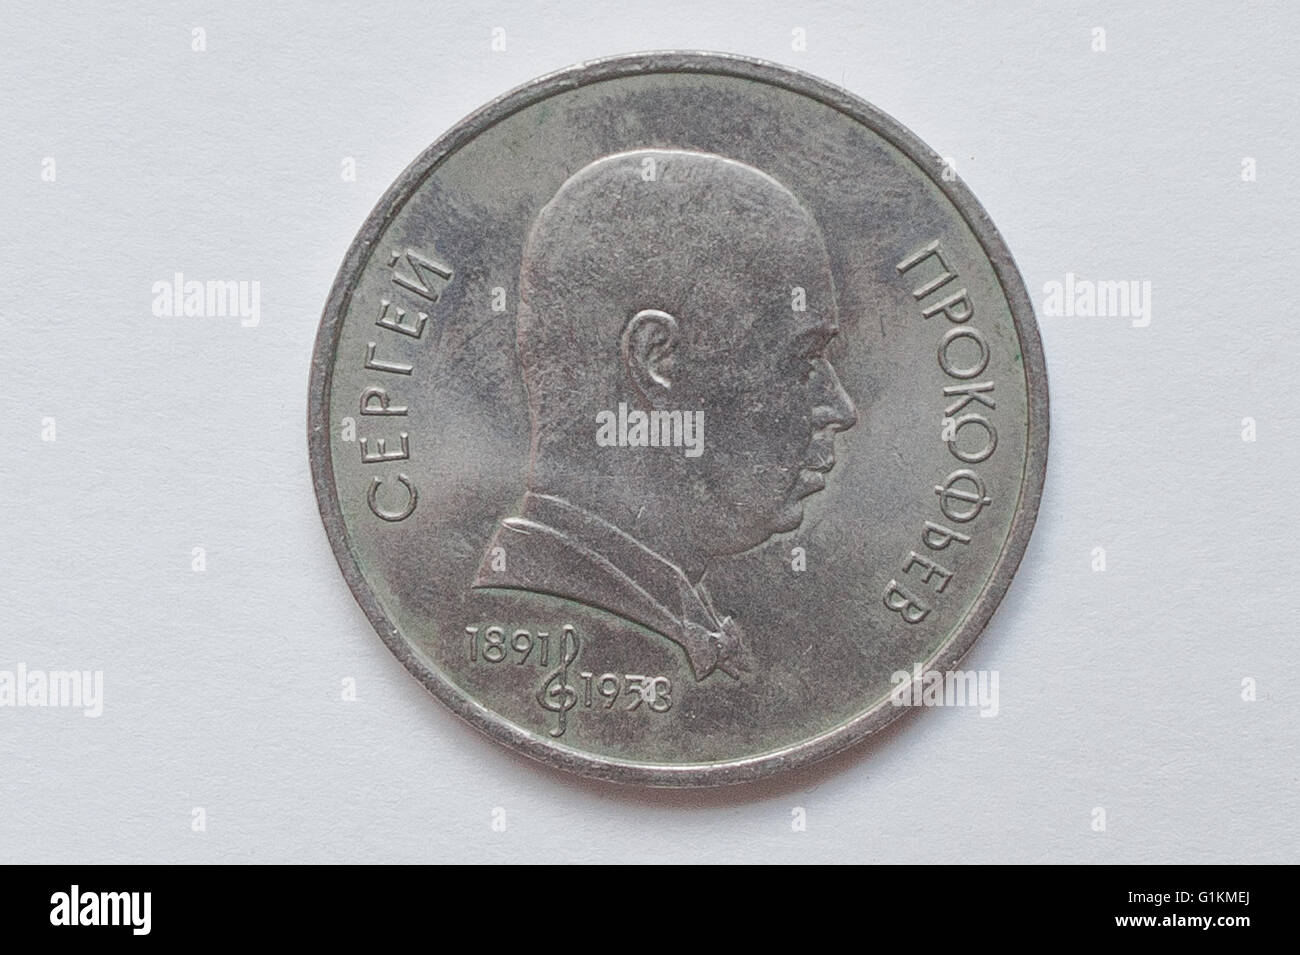 Russia USSR commemorative coin 1 rouble 1991 Sergej Prokofiev